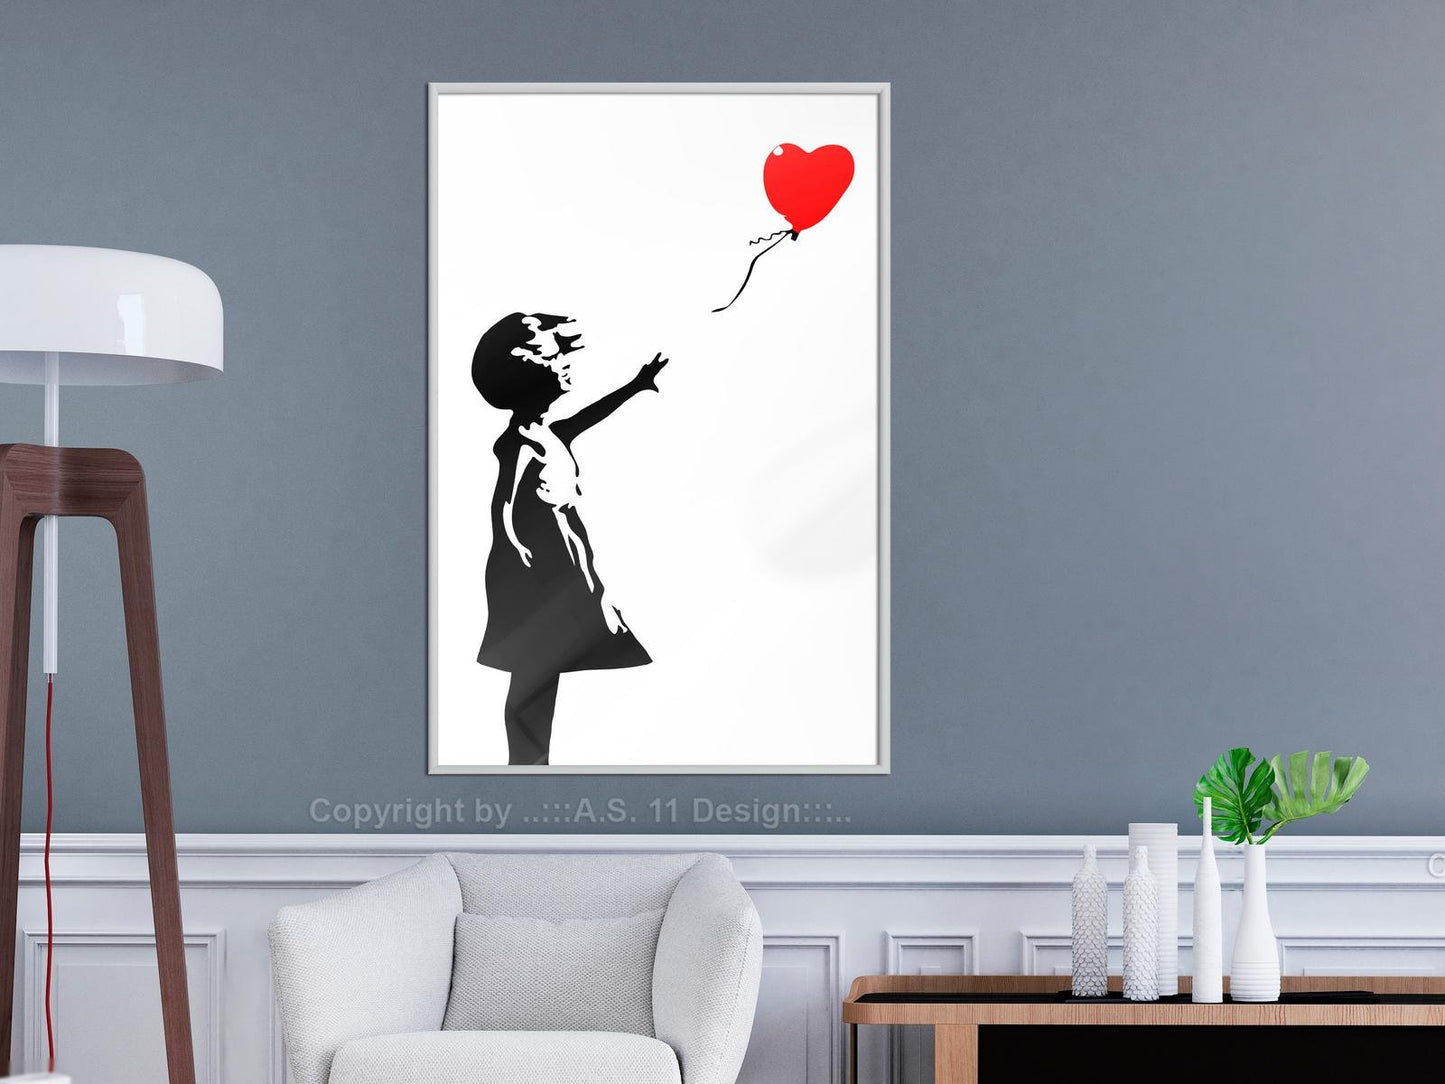 Banksy: Girl with Balloon I